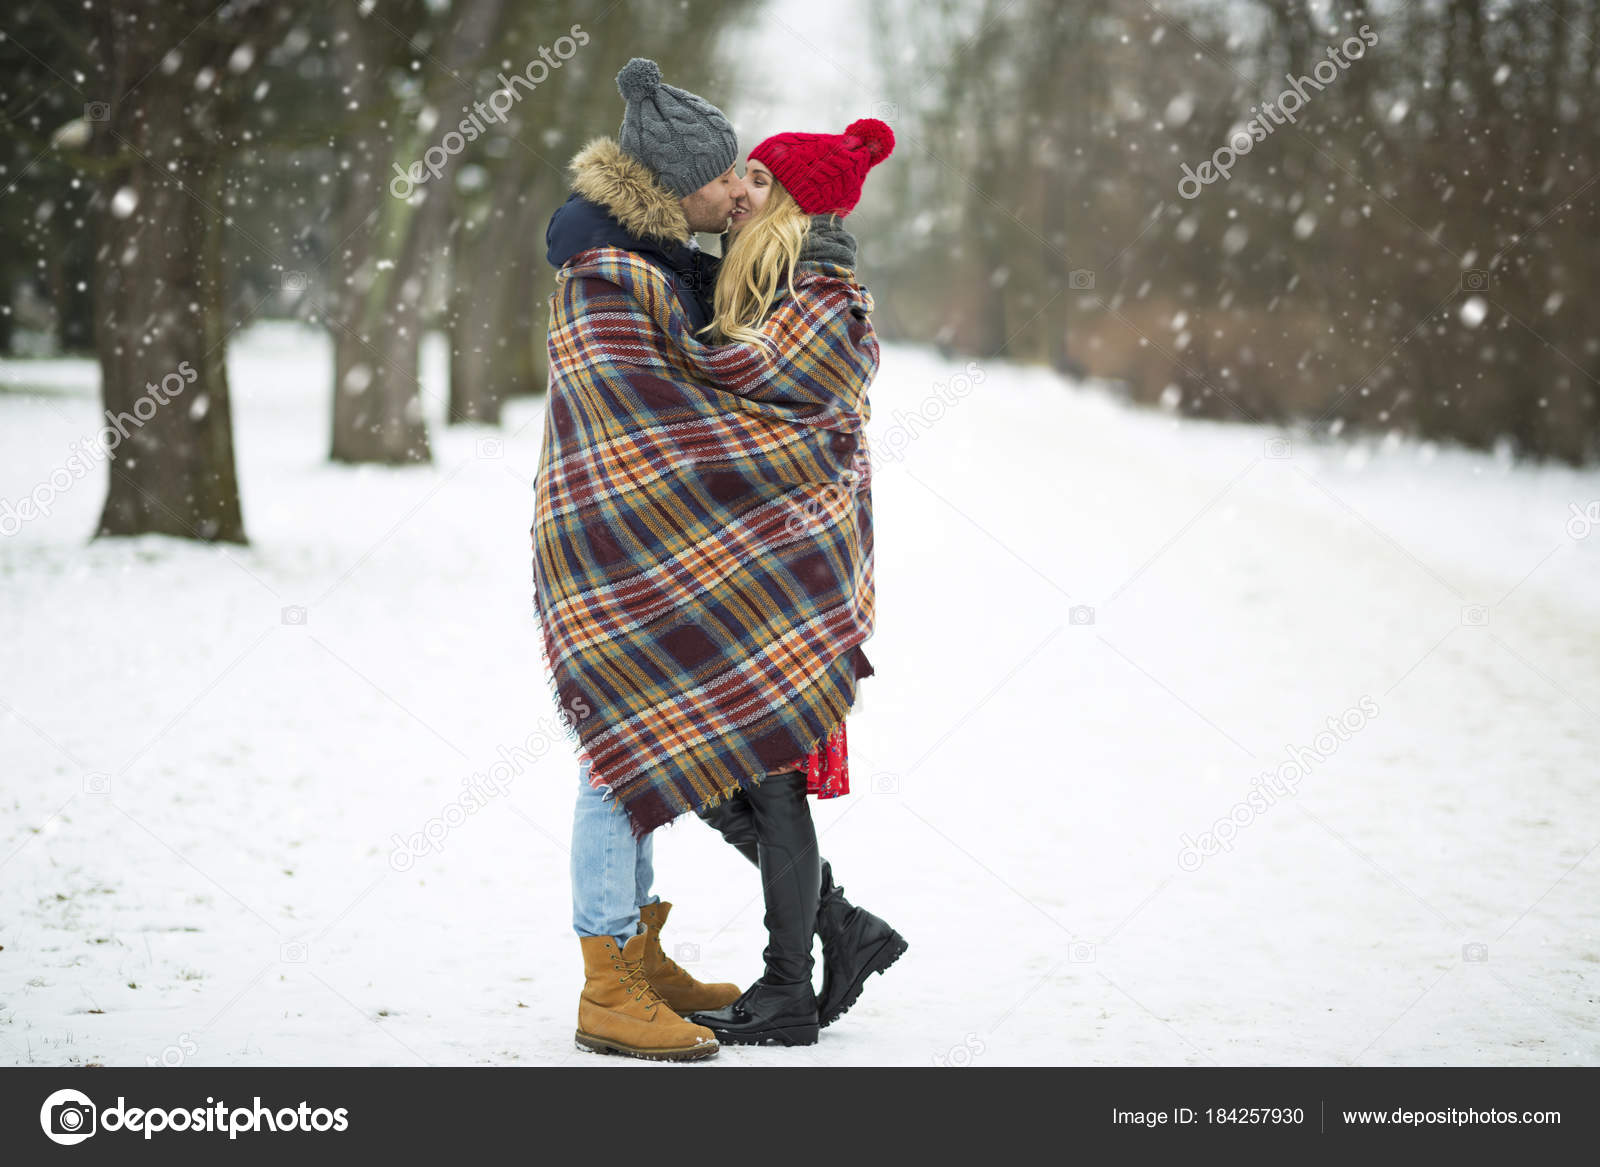 https://st3.depositphotos.com/2234518/18425/i/1600/depositphotos_184257930-stock-photo-couple-love-winter-scenery.jpg